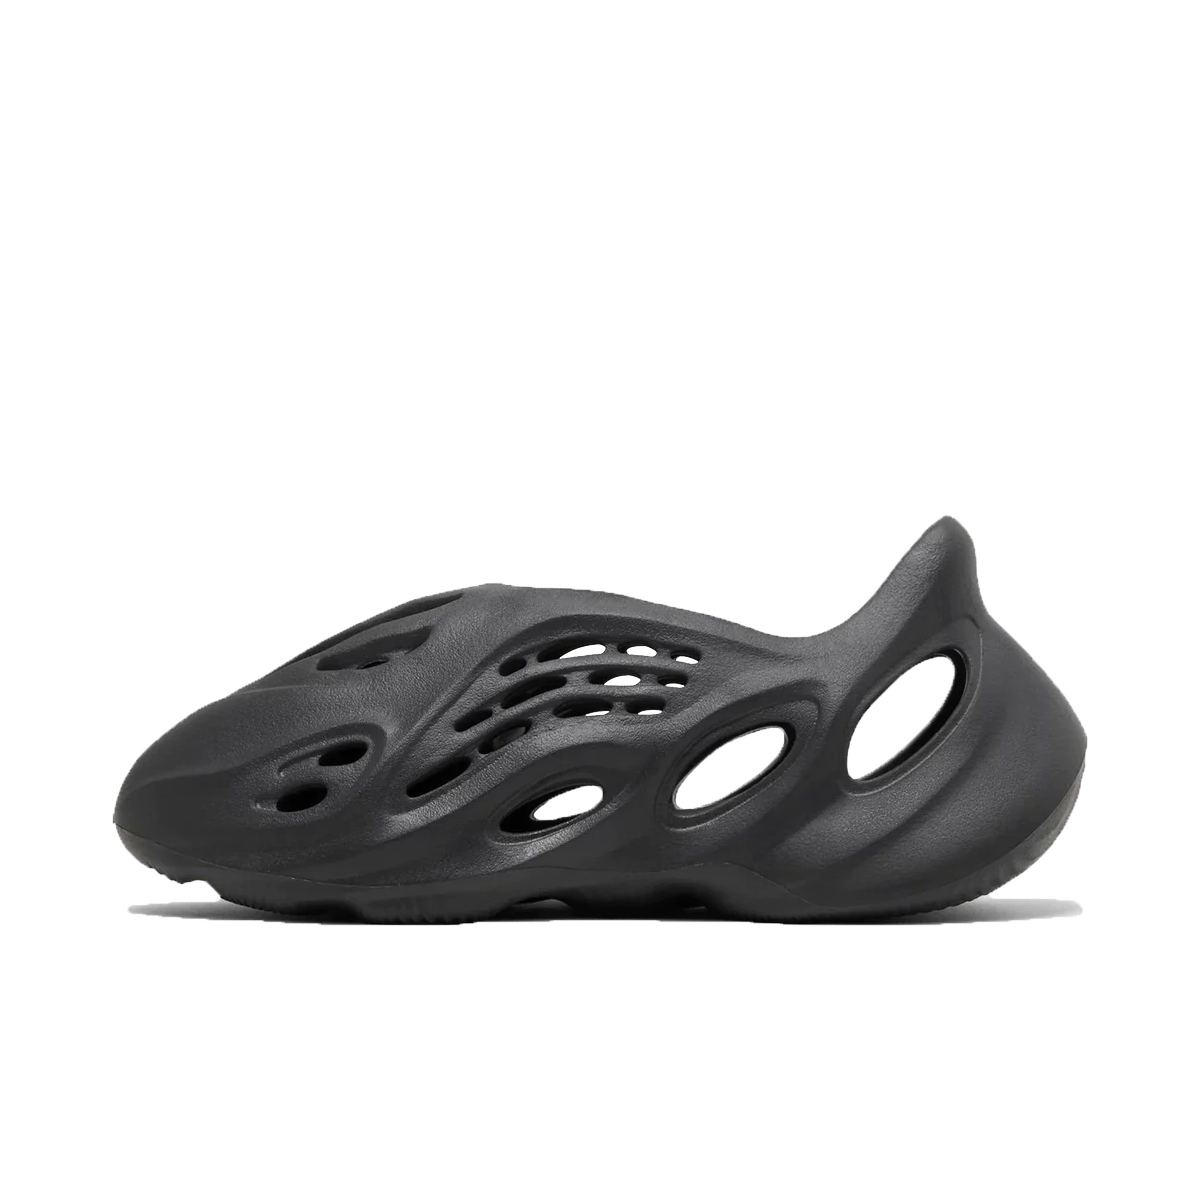 adidas Yeezy Foam Runner 'Carbon' | IG5349 | The Drop Date